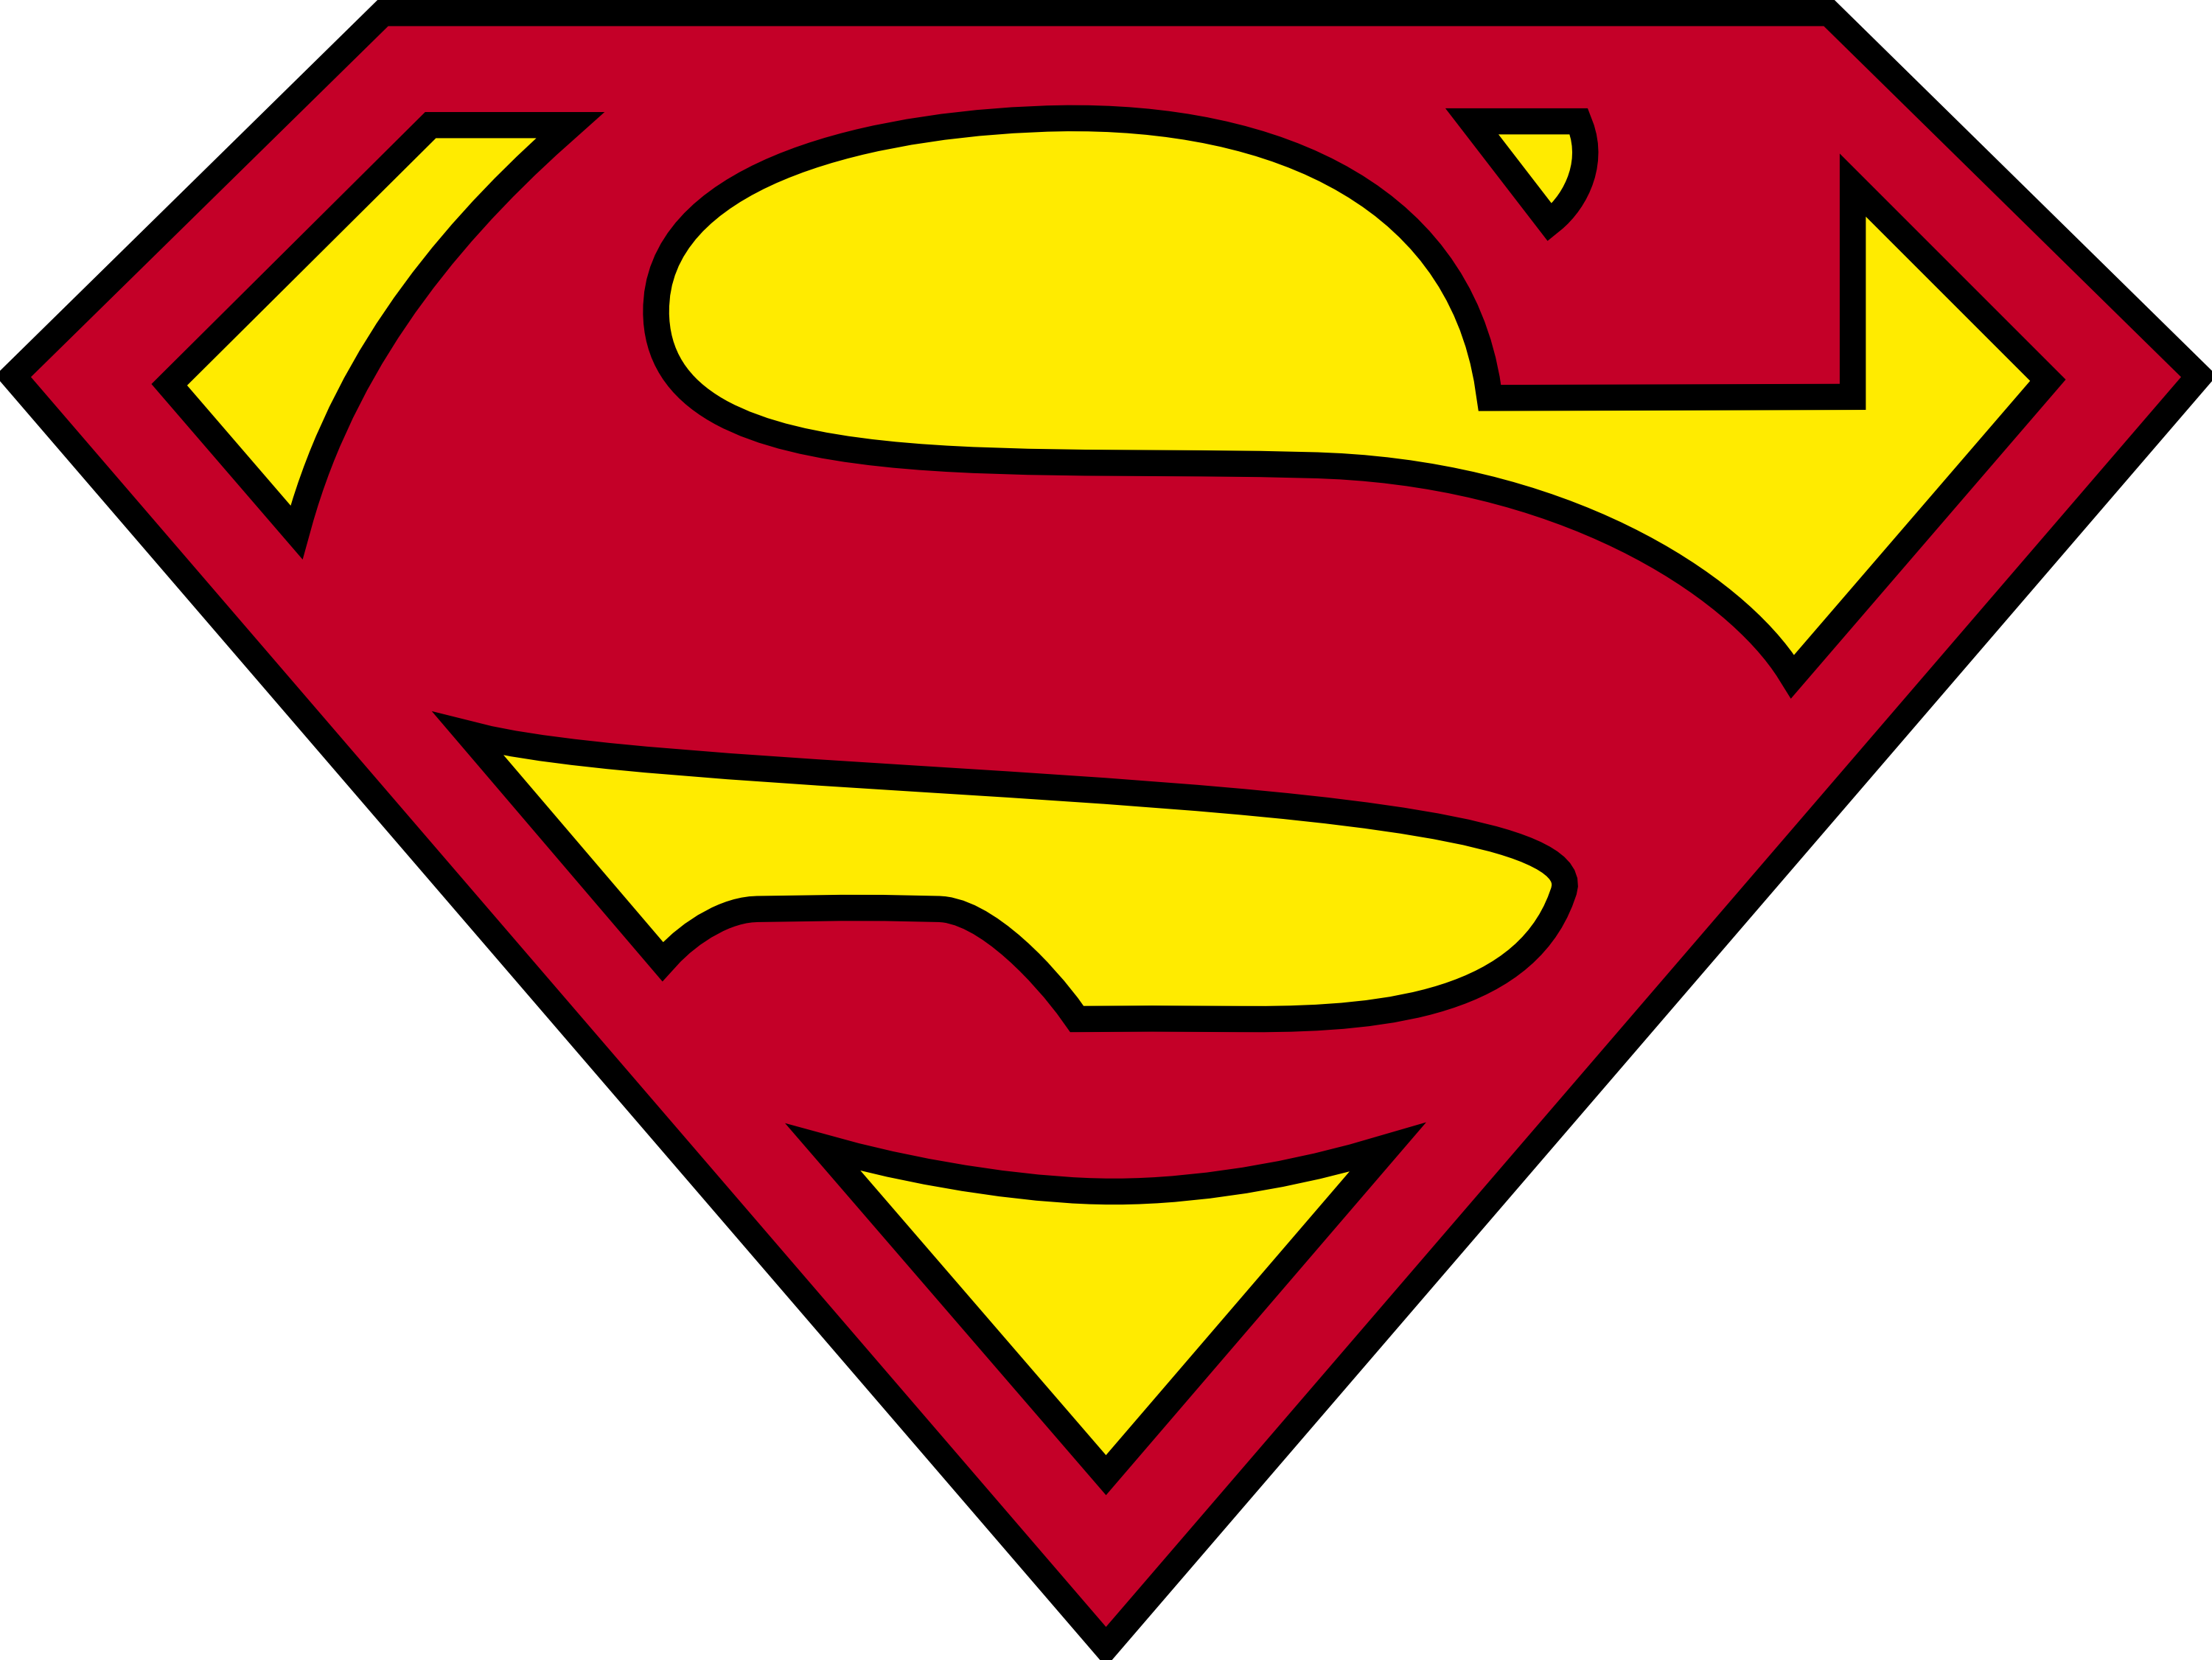 PNG File Name: Superman PlusP